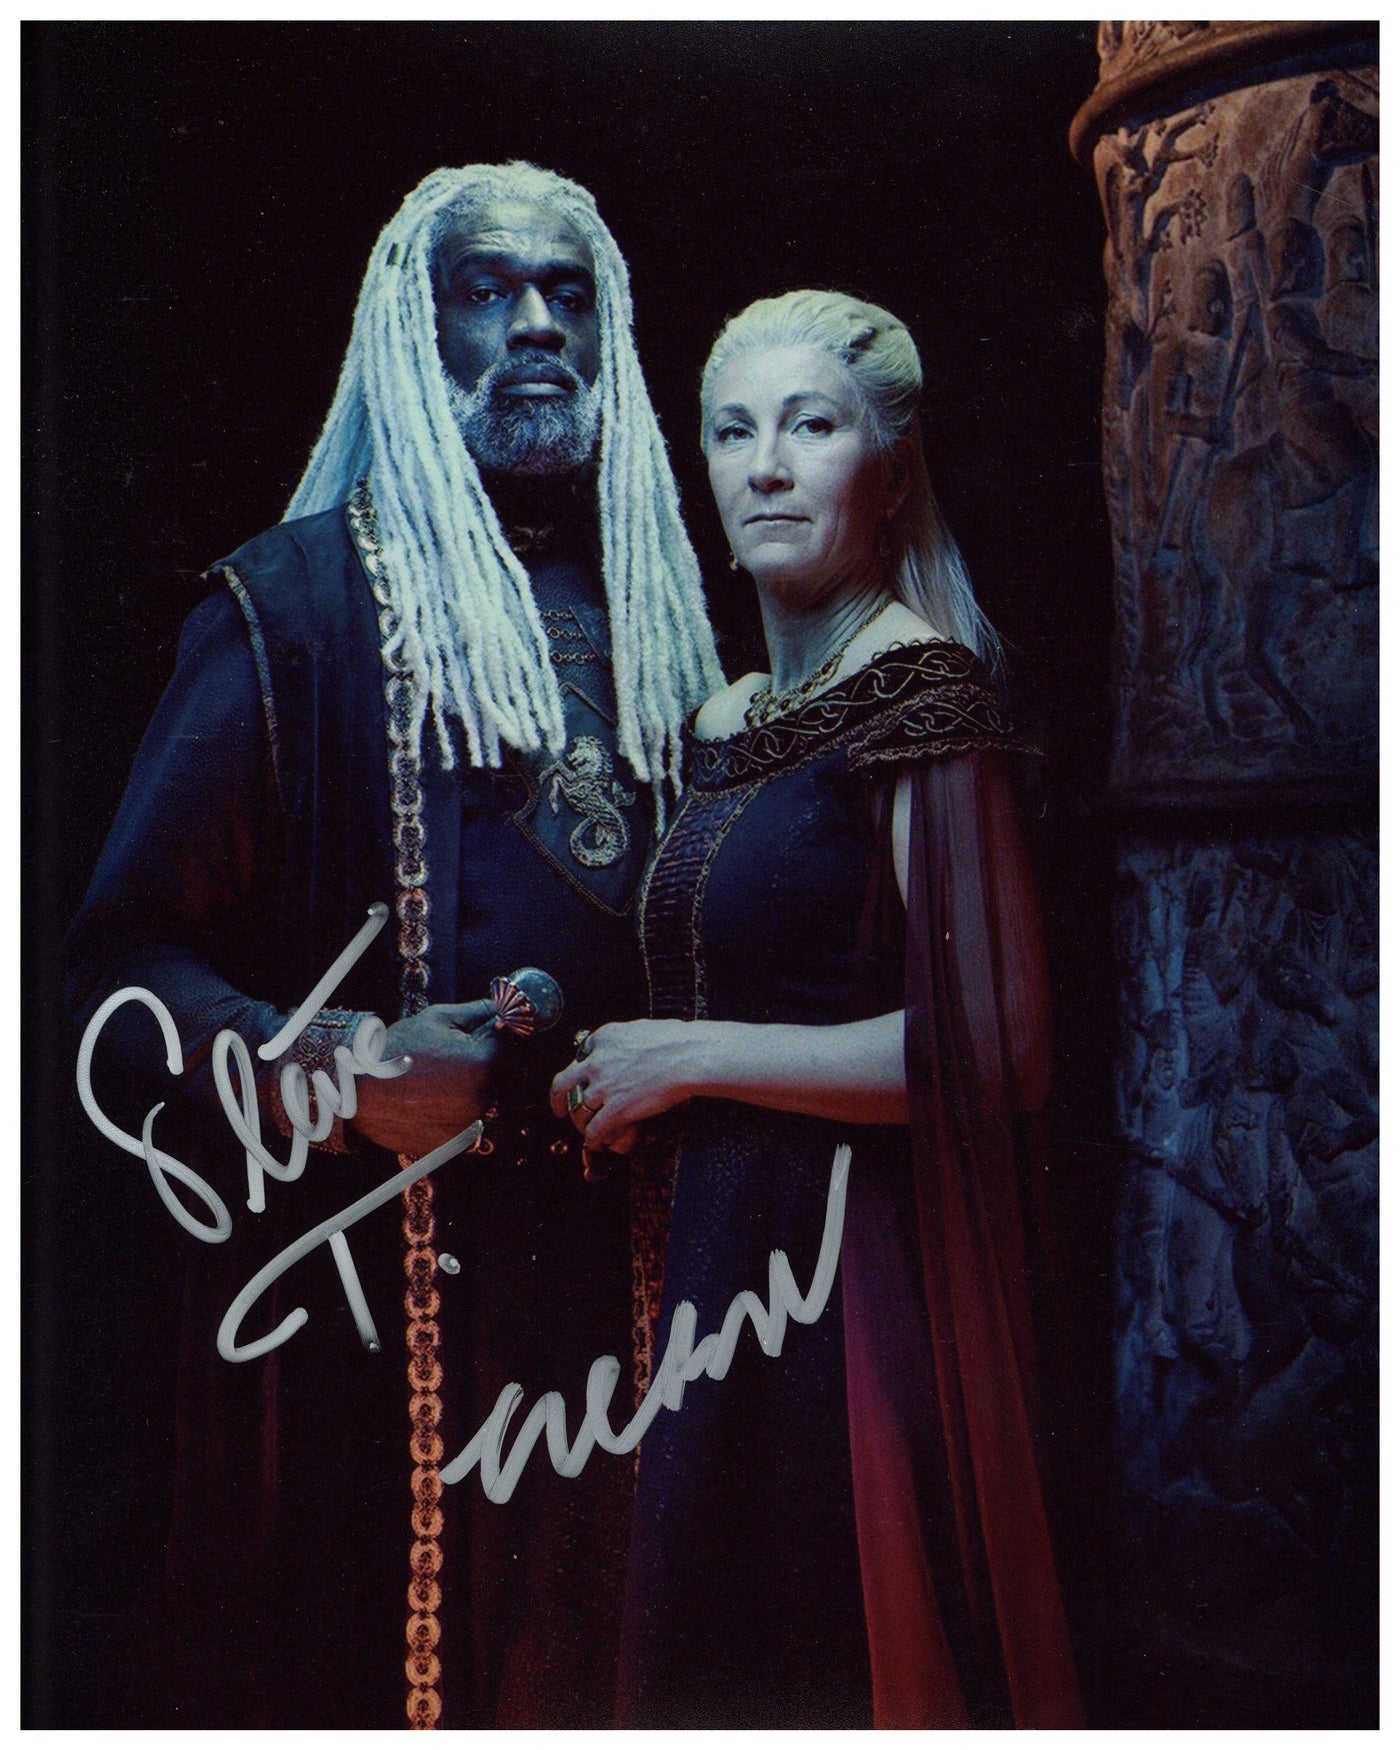 Eve Best & Steve Toussaint Signed 8x10 Photo House of Dragon Autographed ACOA